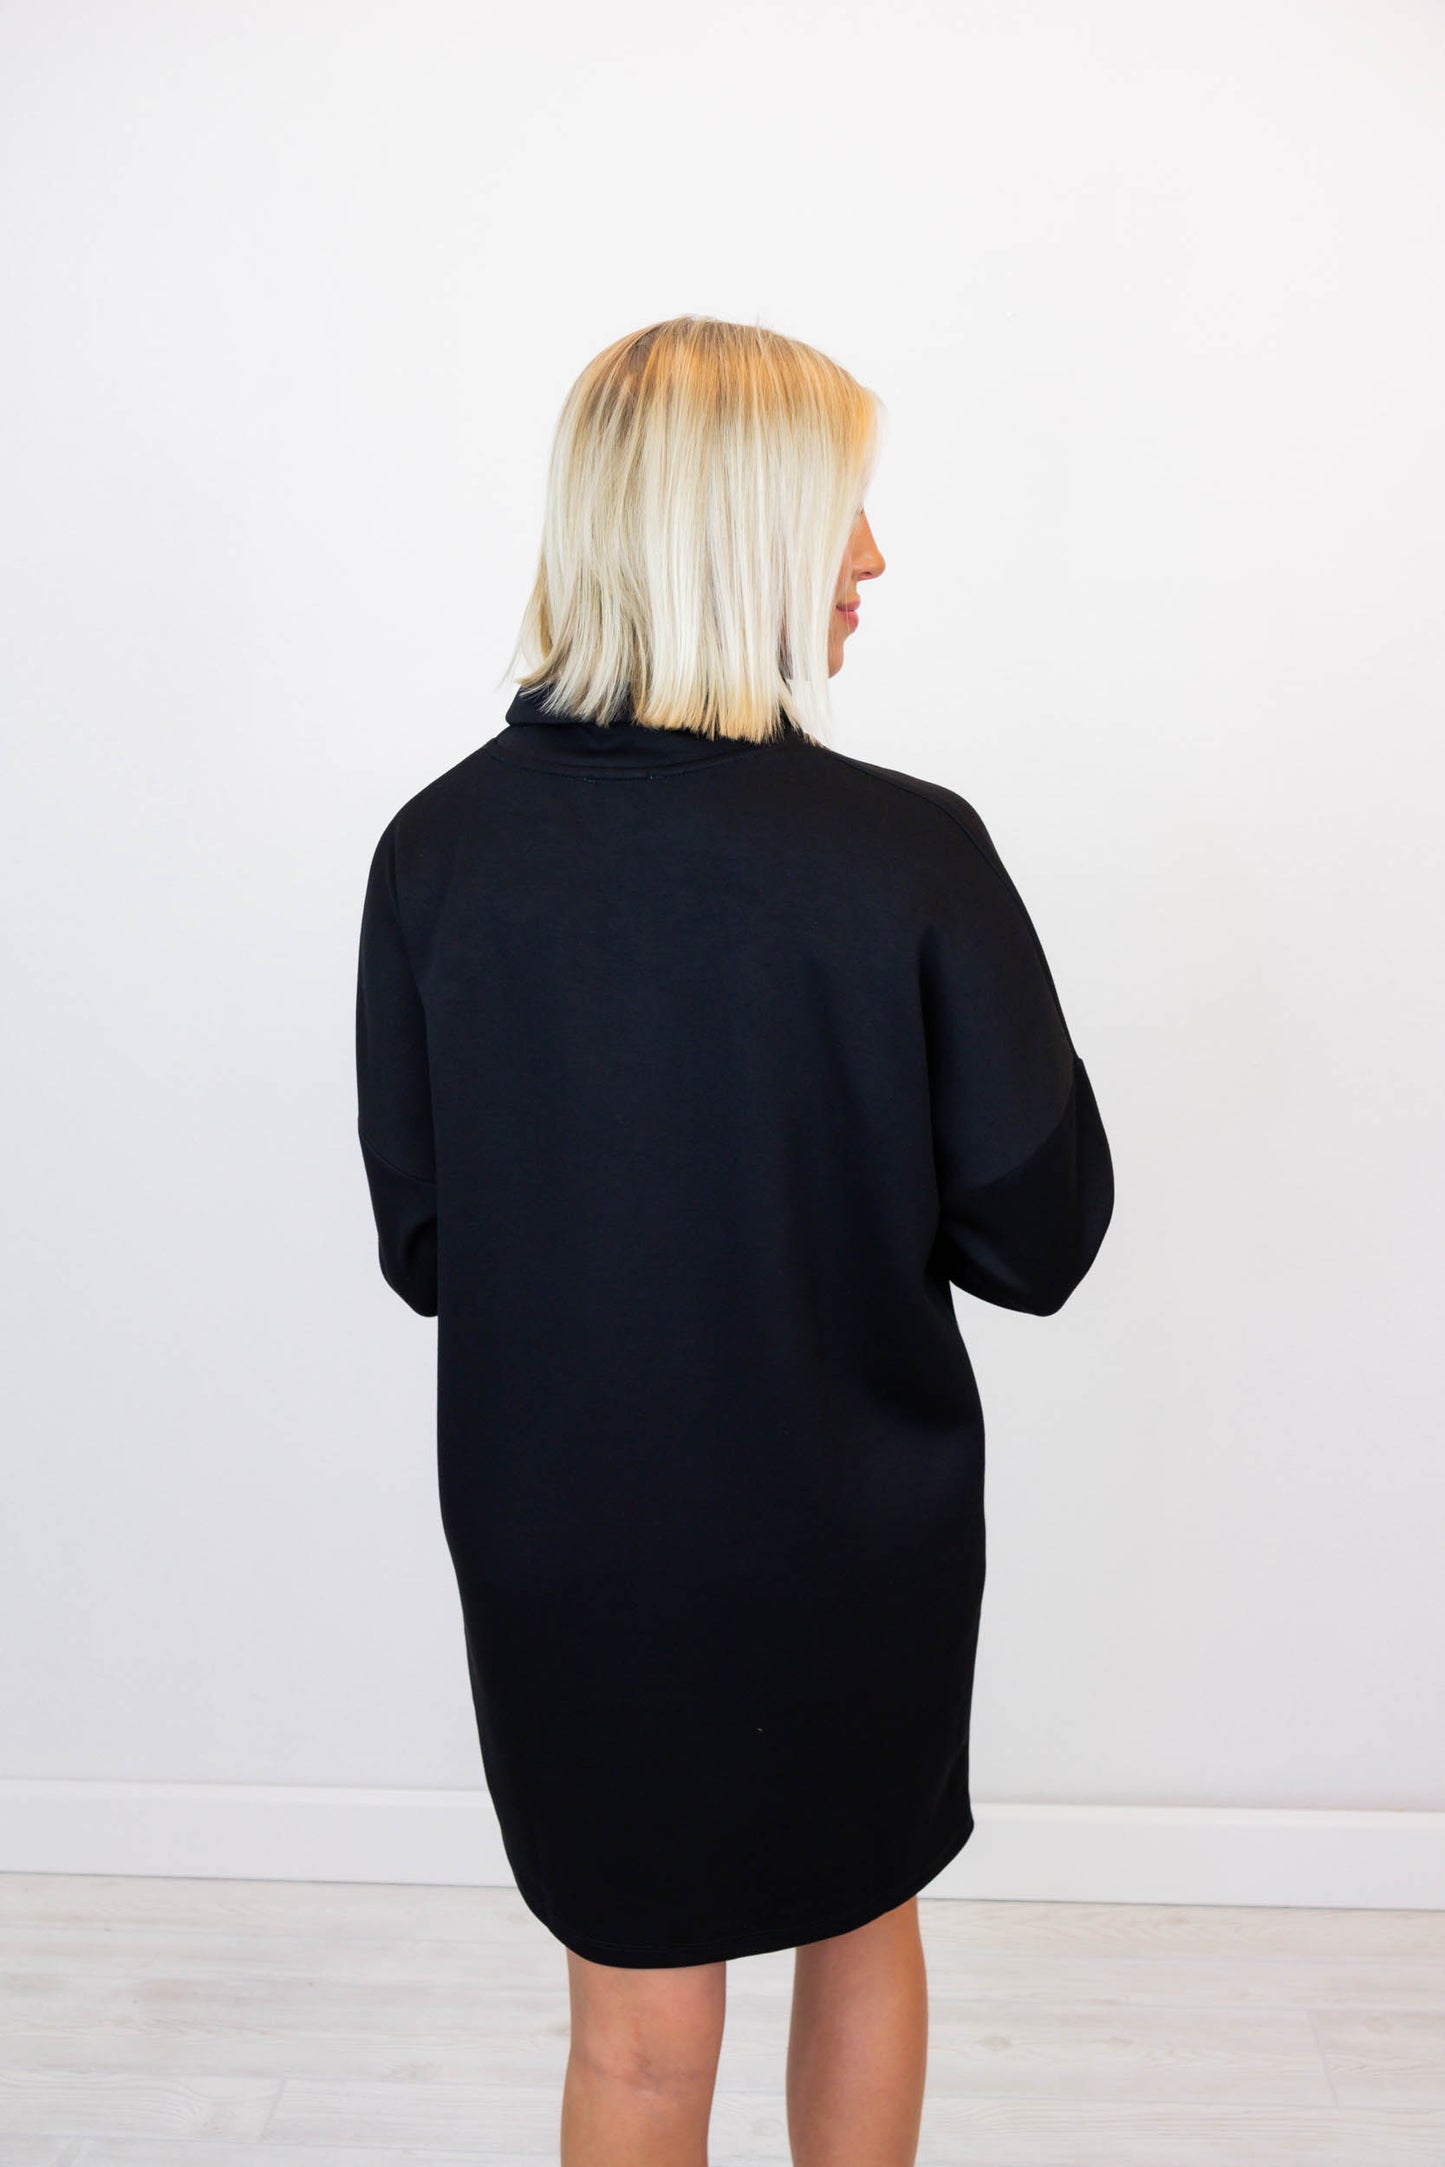 Sarah Cowl Neck Dress | Black